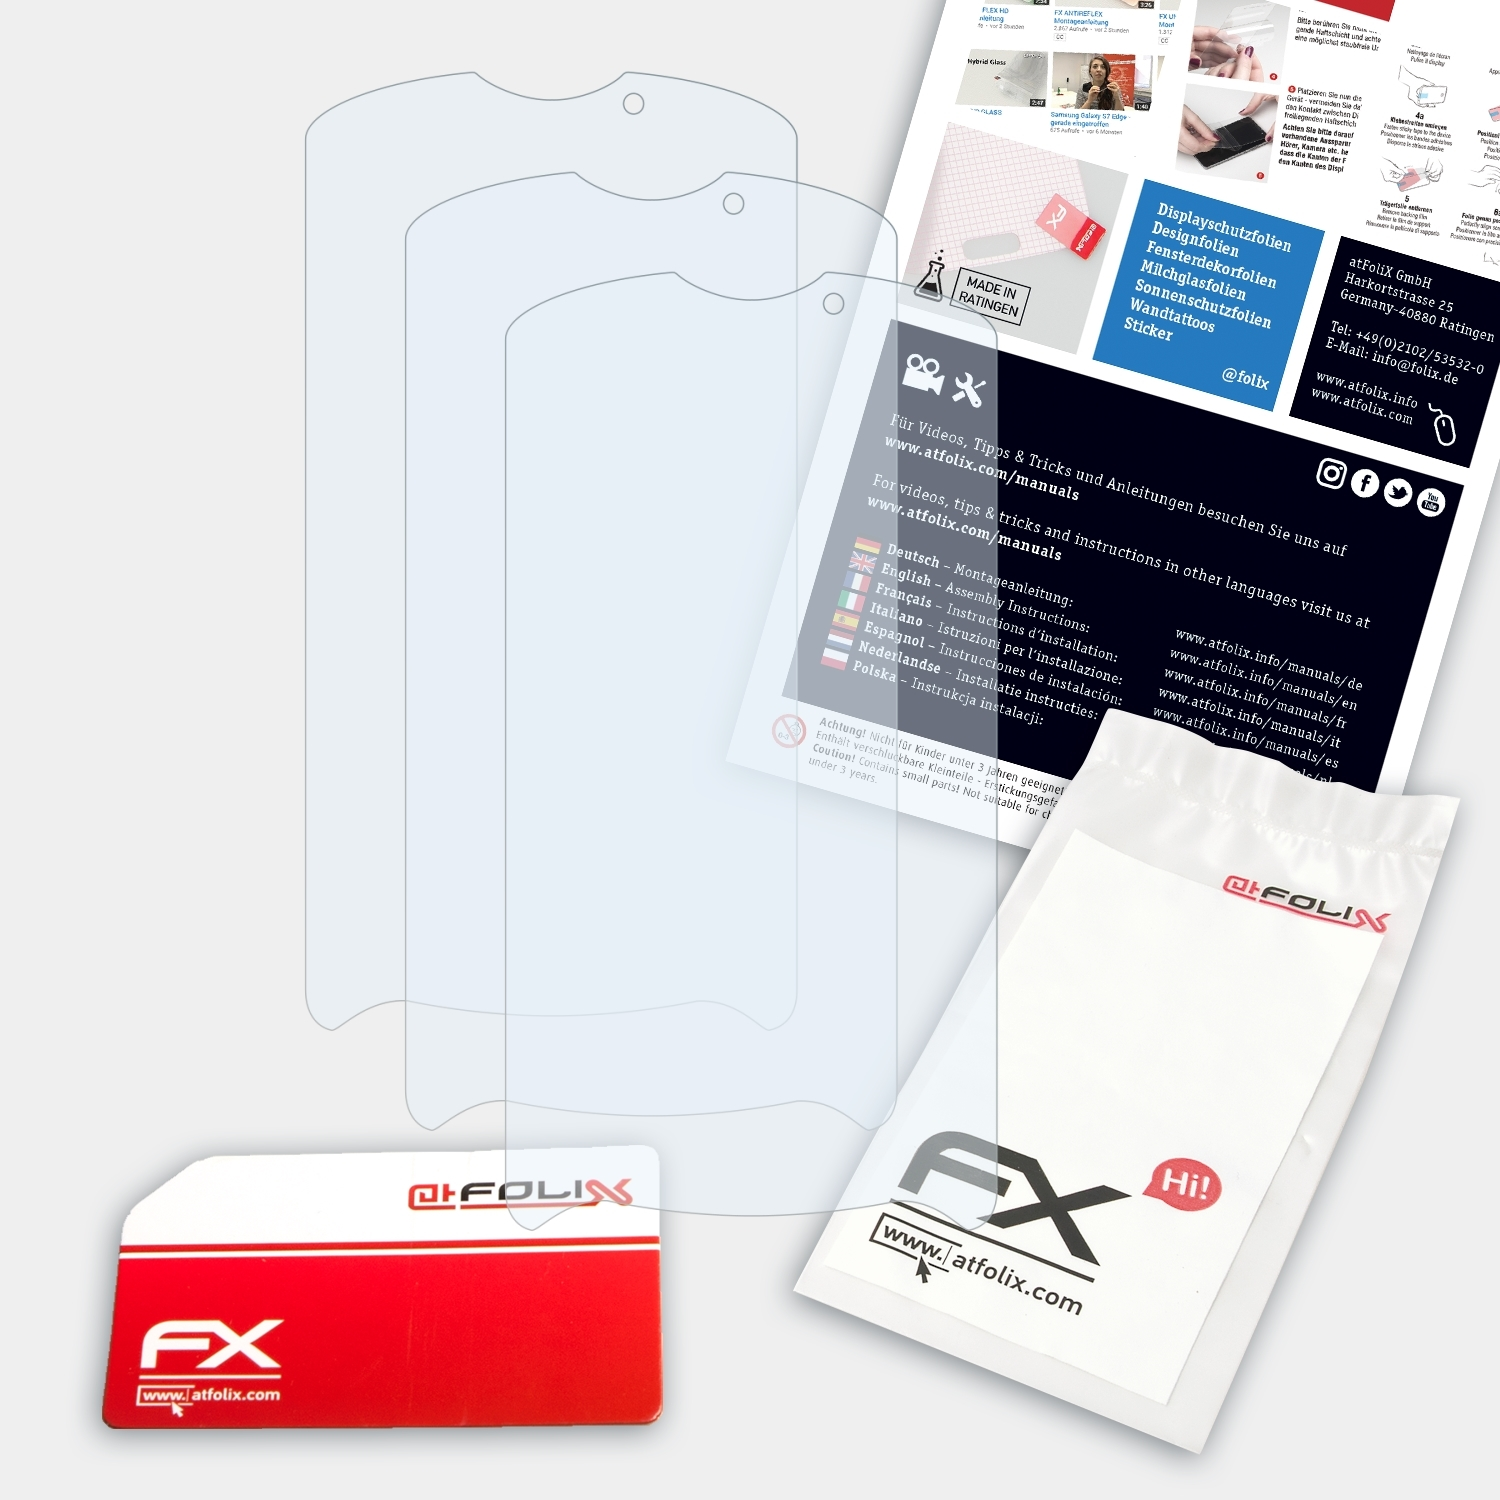 ATFOLIX 3x FX-Clear Displayschutz(für pro) Xperia Sony-Ericsson